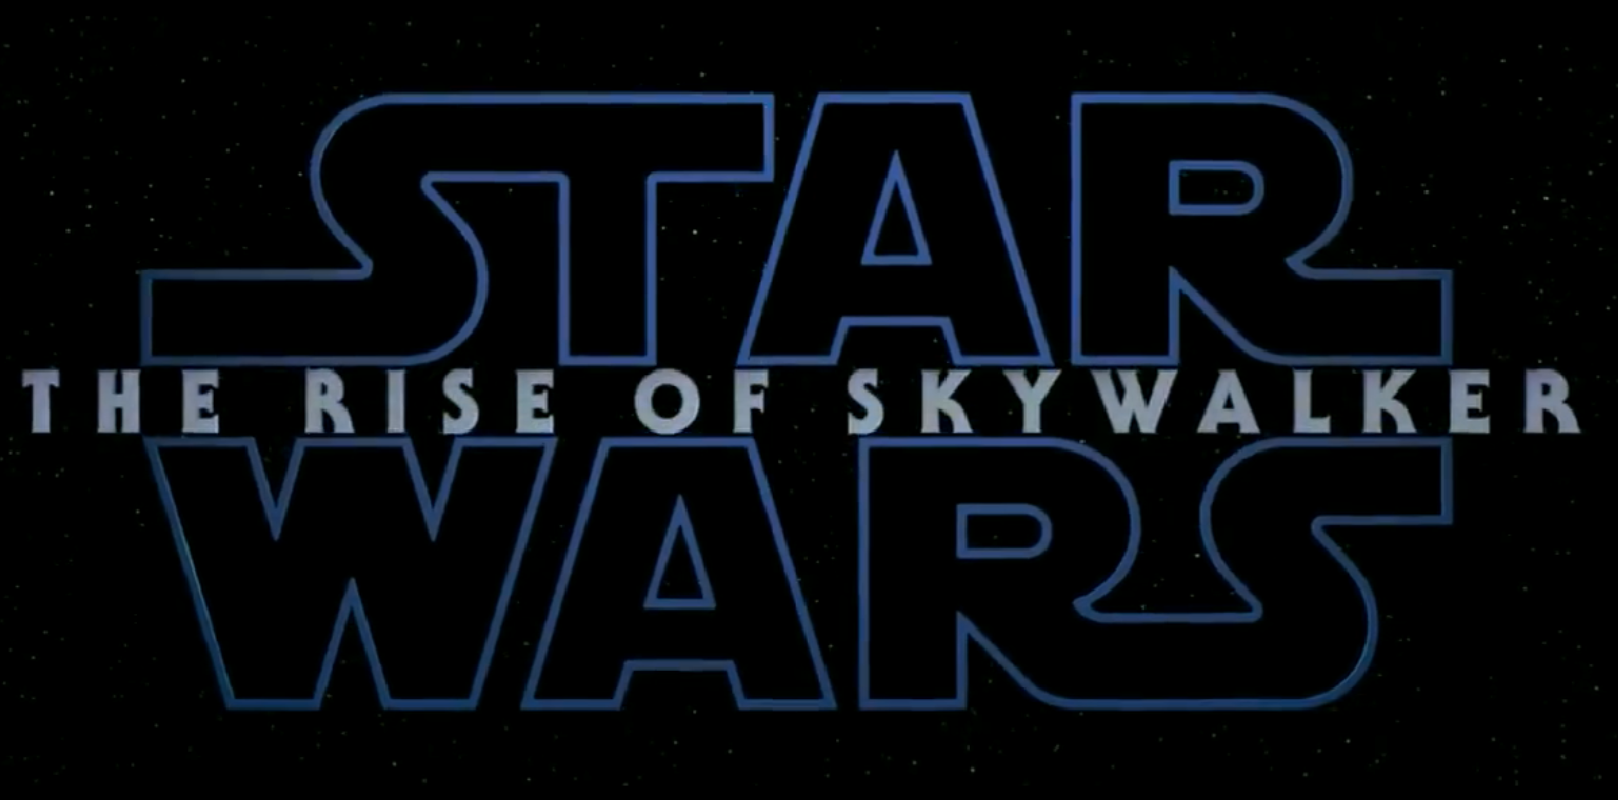 Star wars Logo 